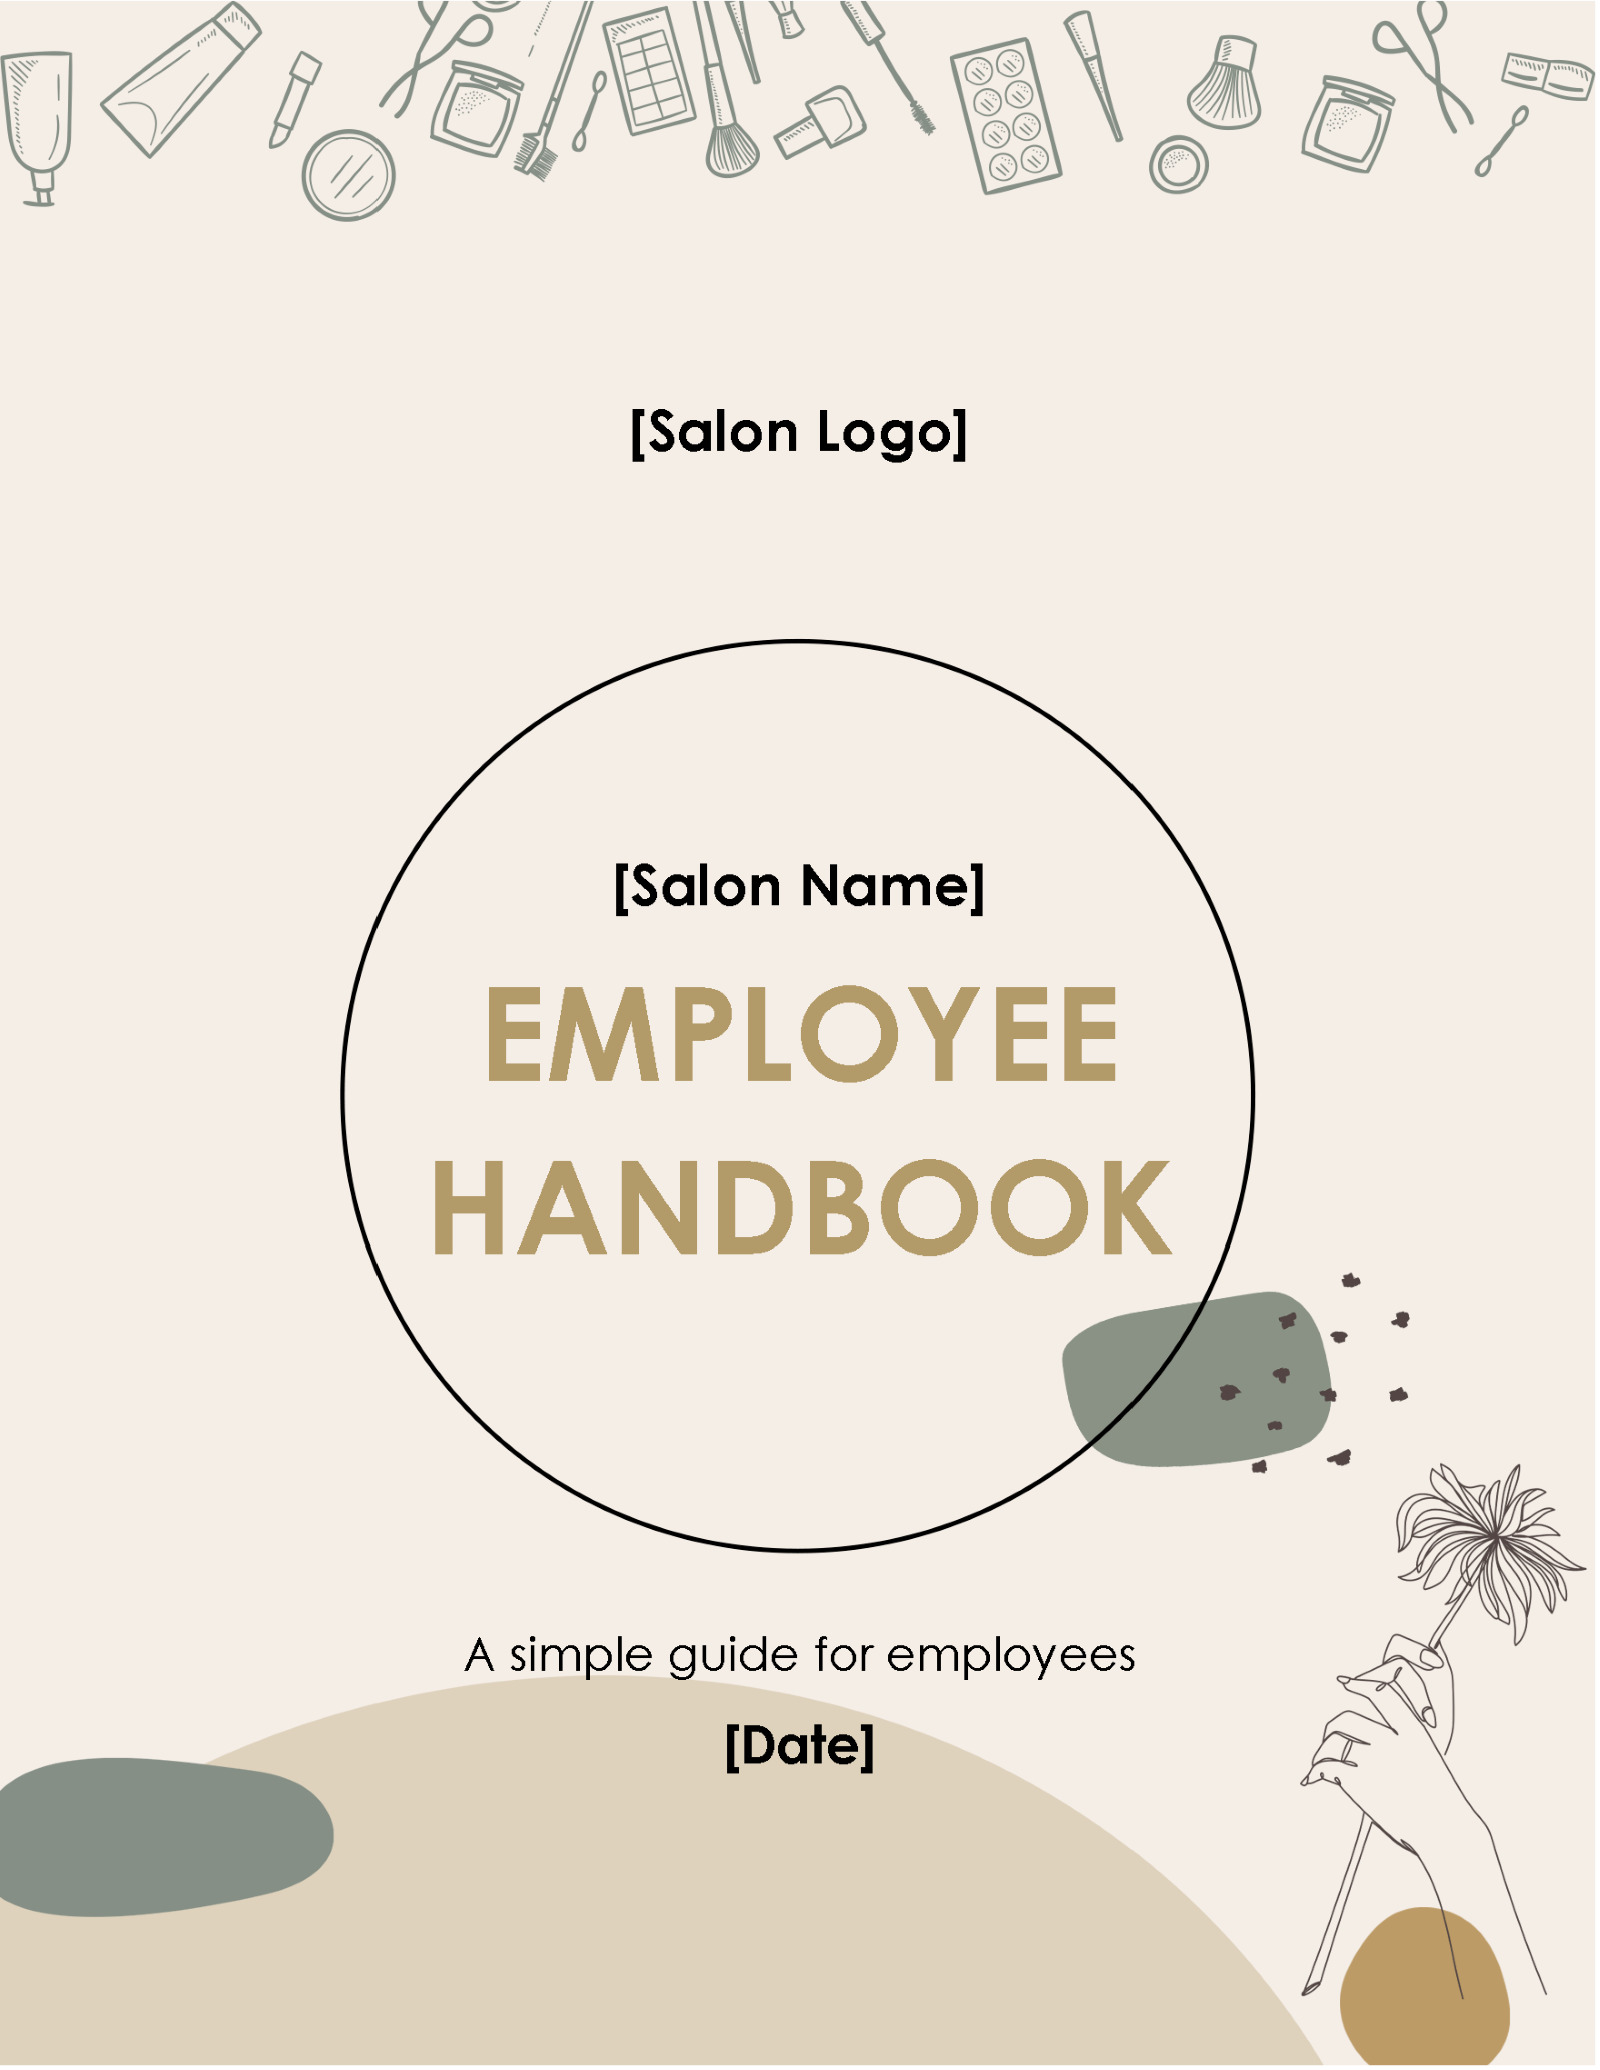 Employee Handbook Template for Small Business